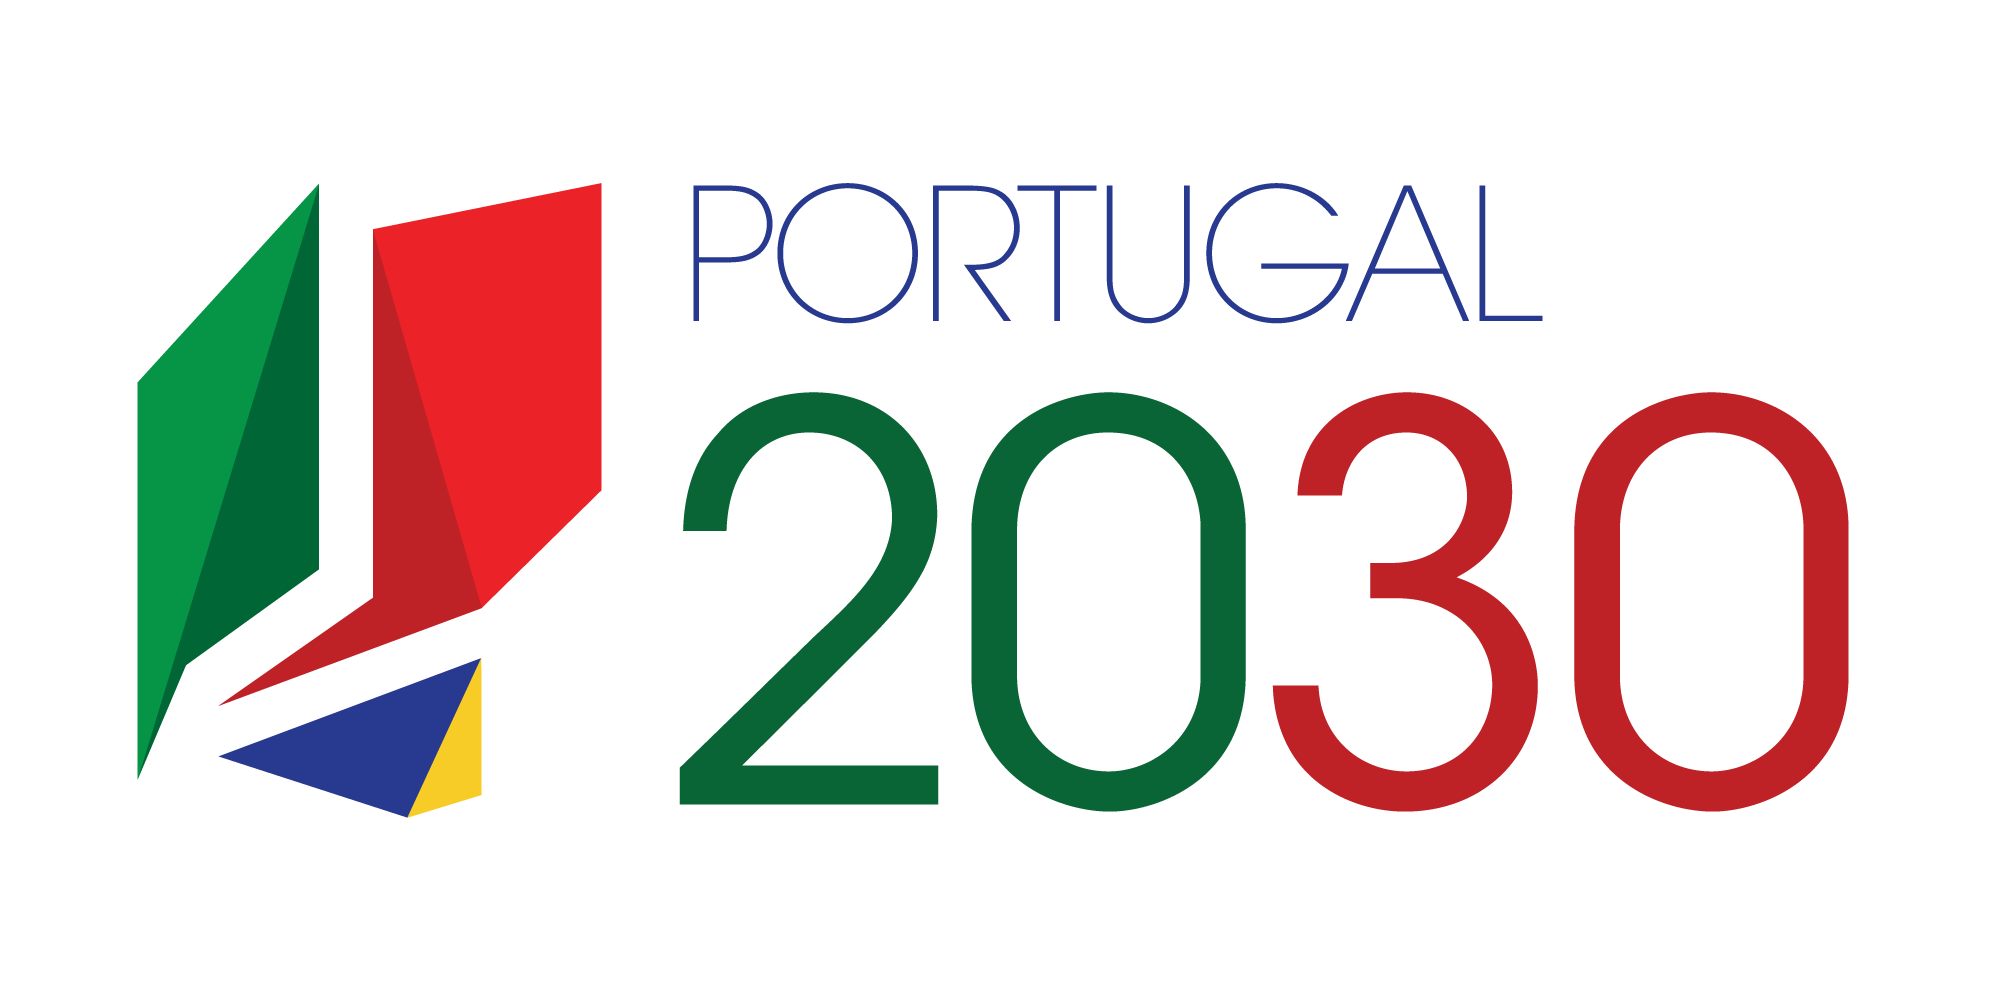 Novo Portal Portugal 2030